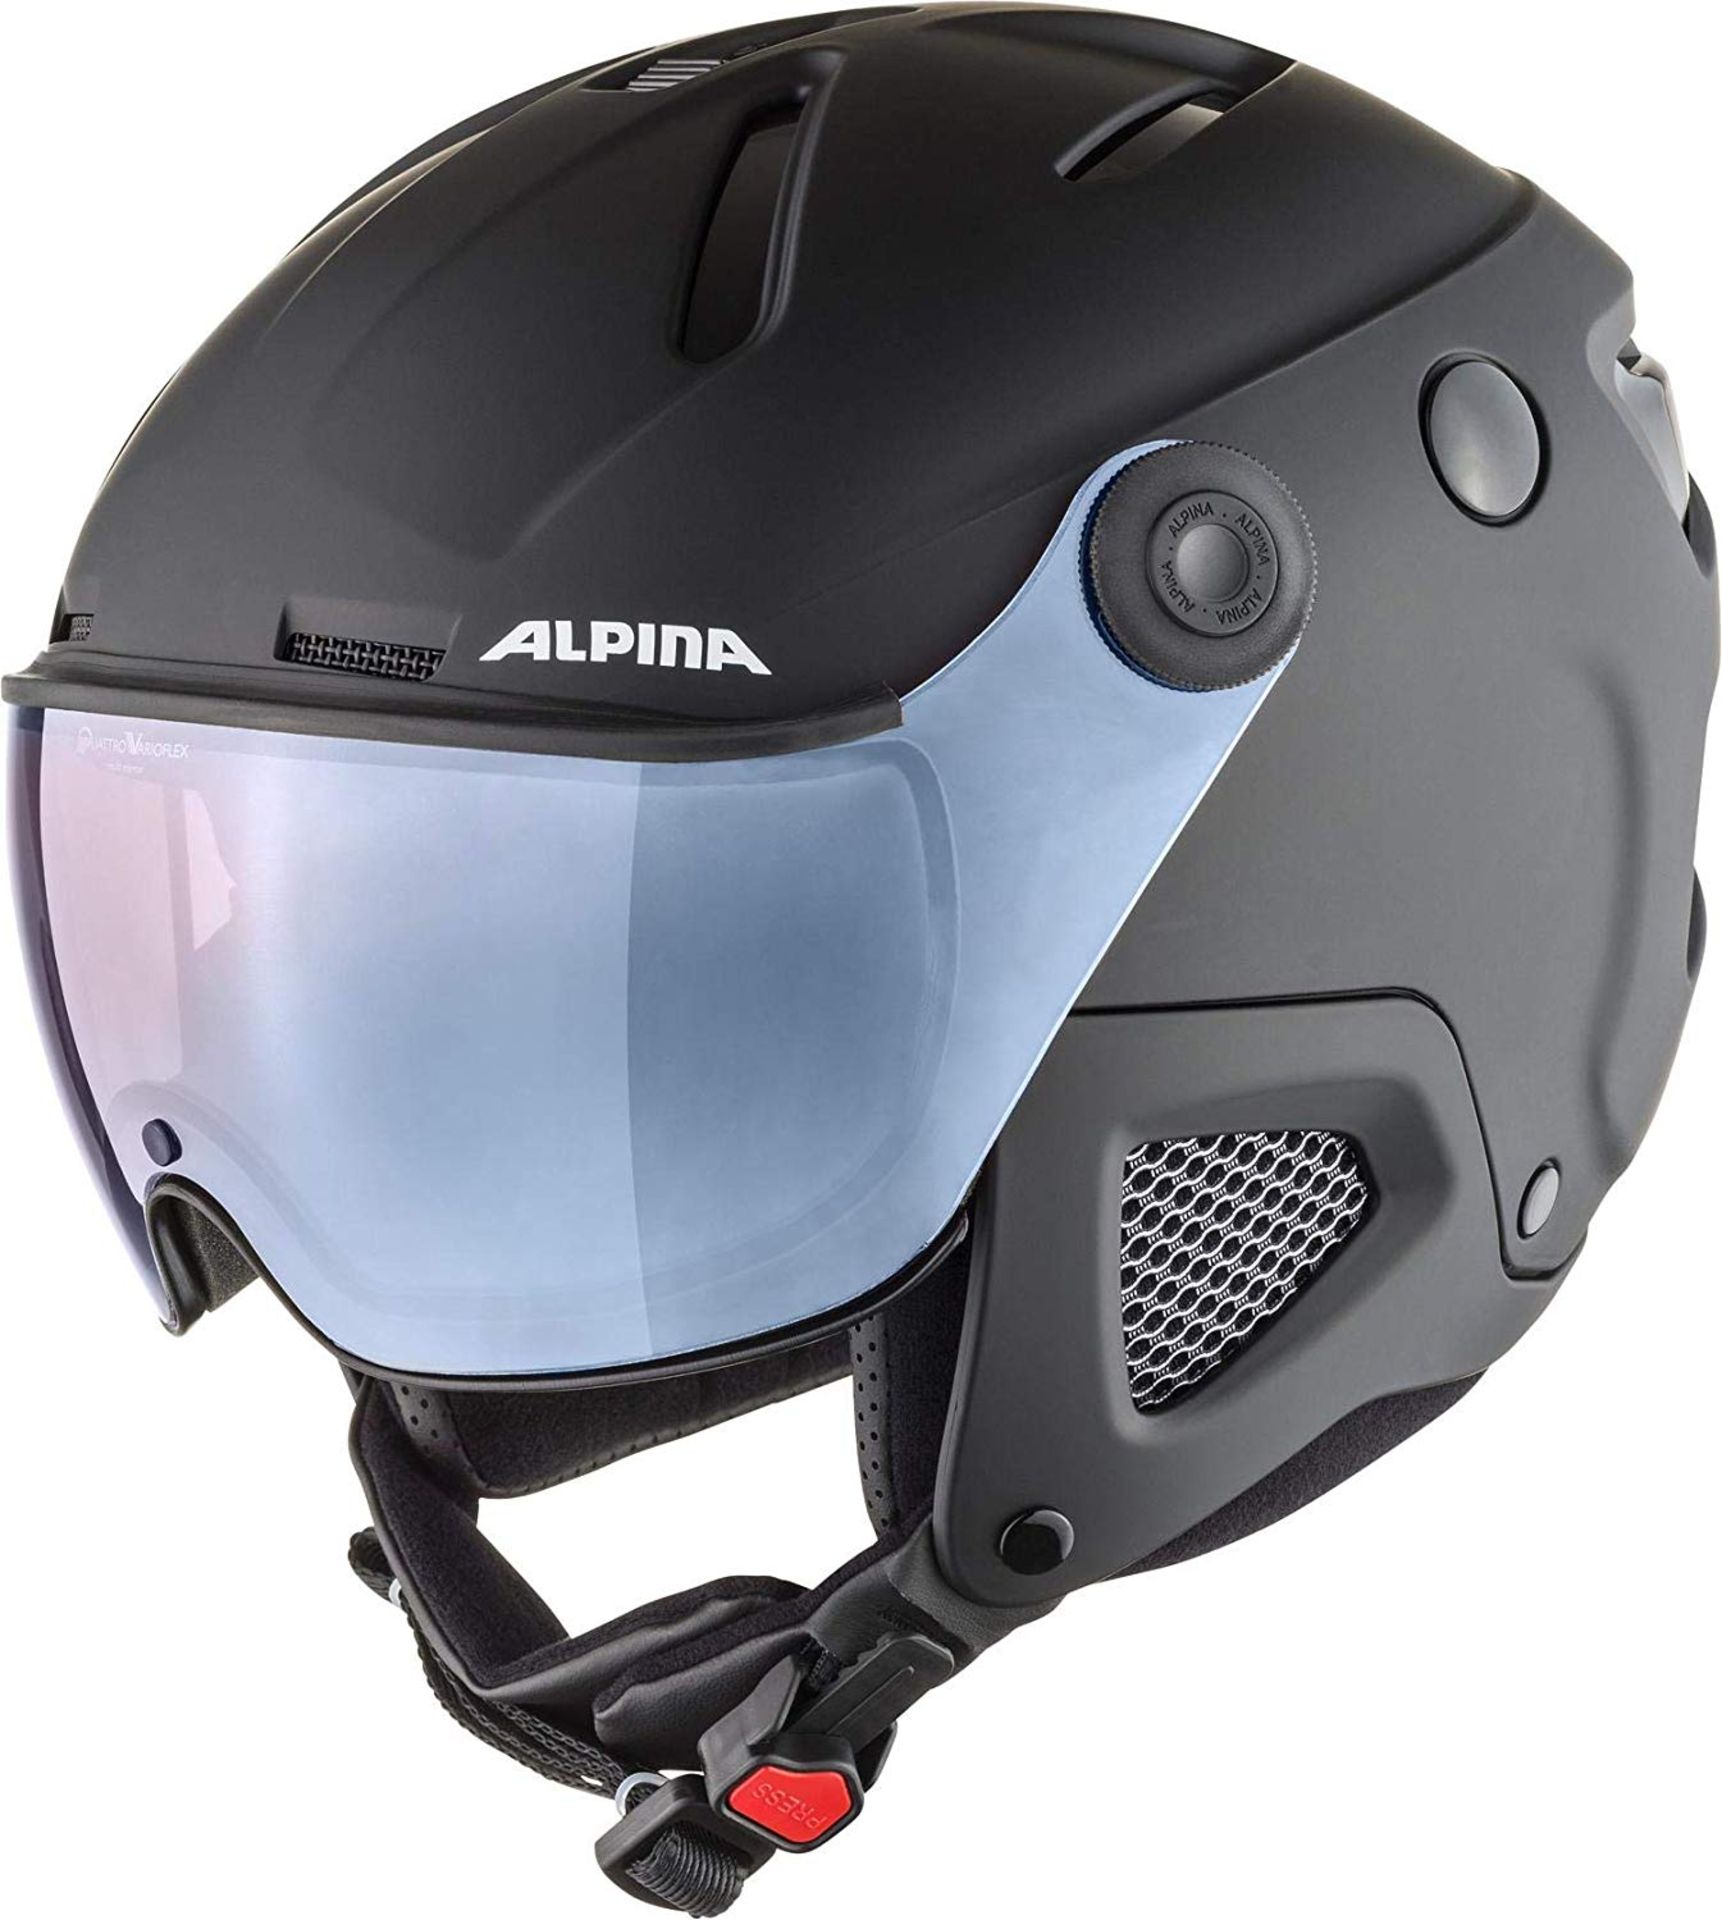 ALPINA Unisex's ATTELAS VISOR QVM Ski and Snowboard Helmet, 58-61 cm RRP £225.99